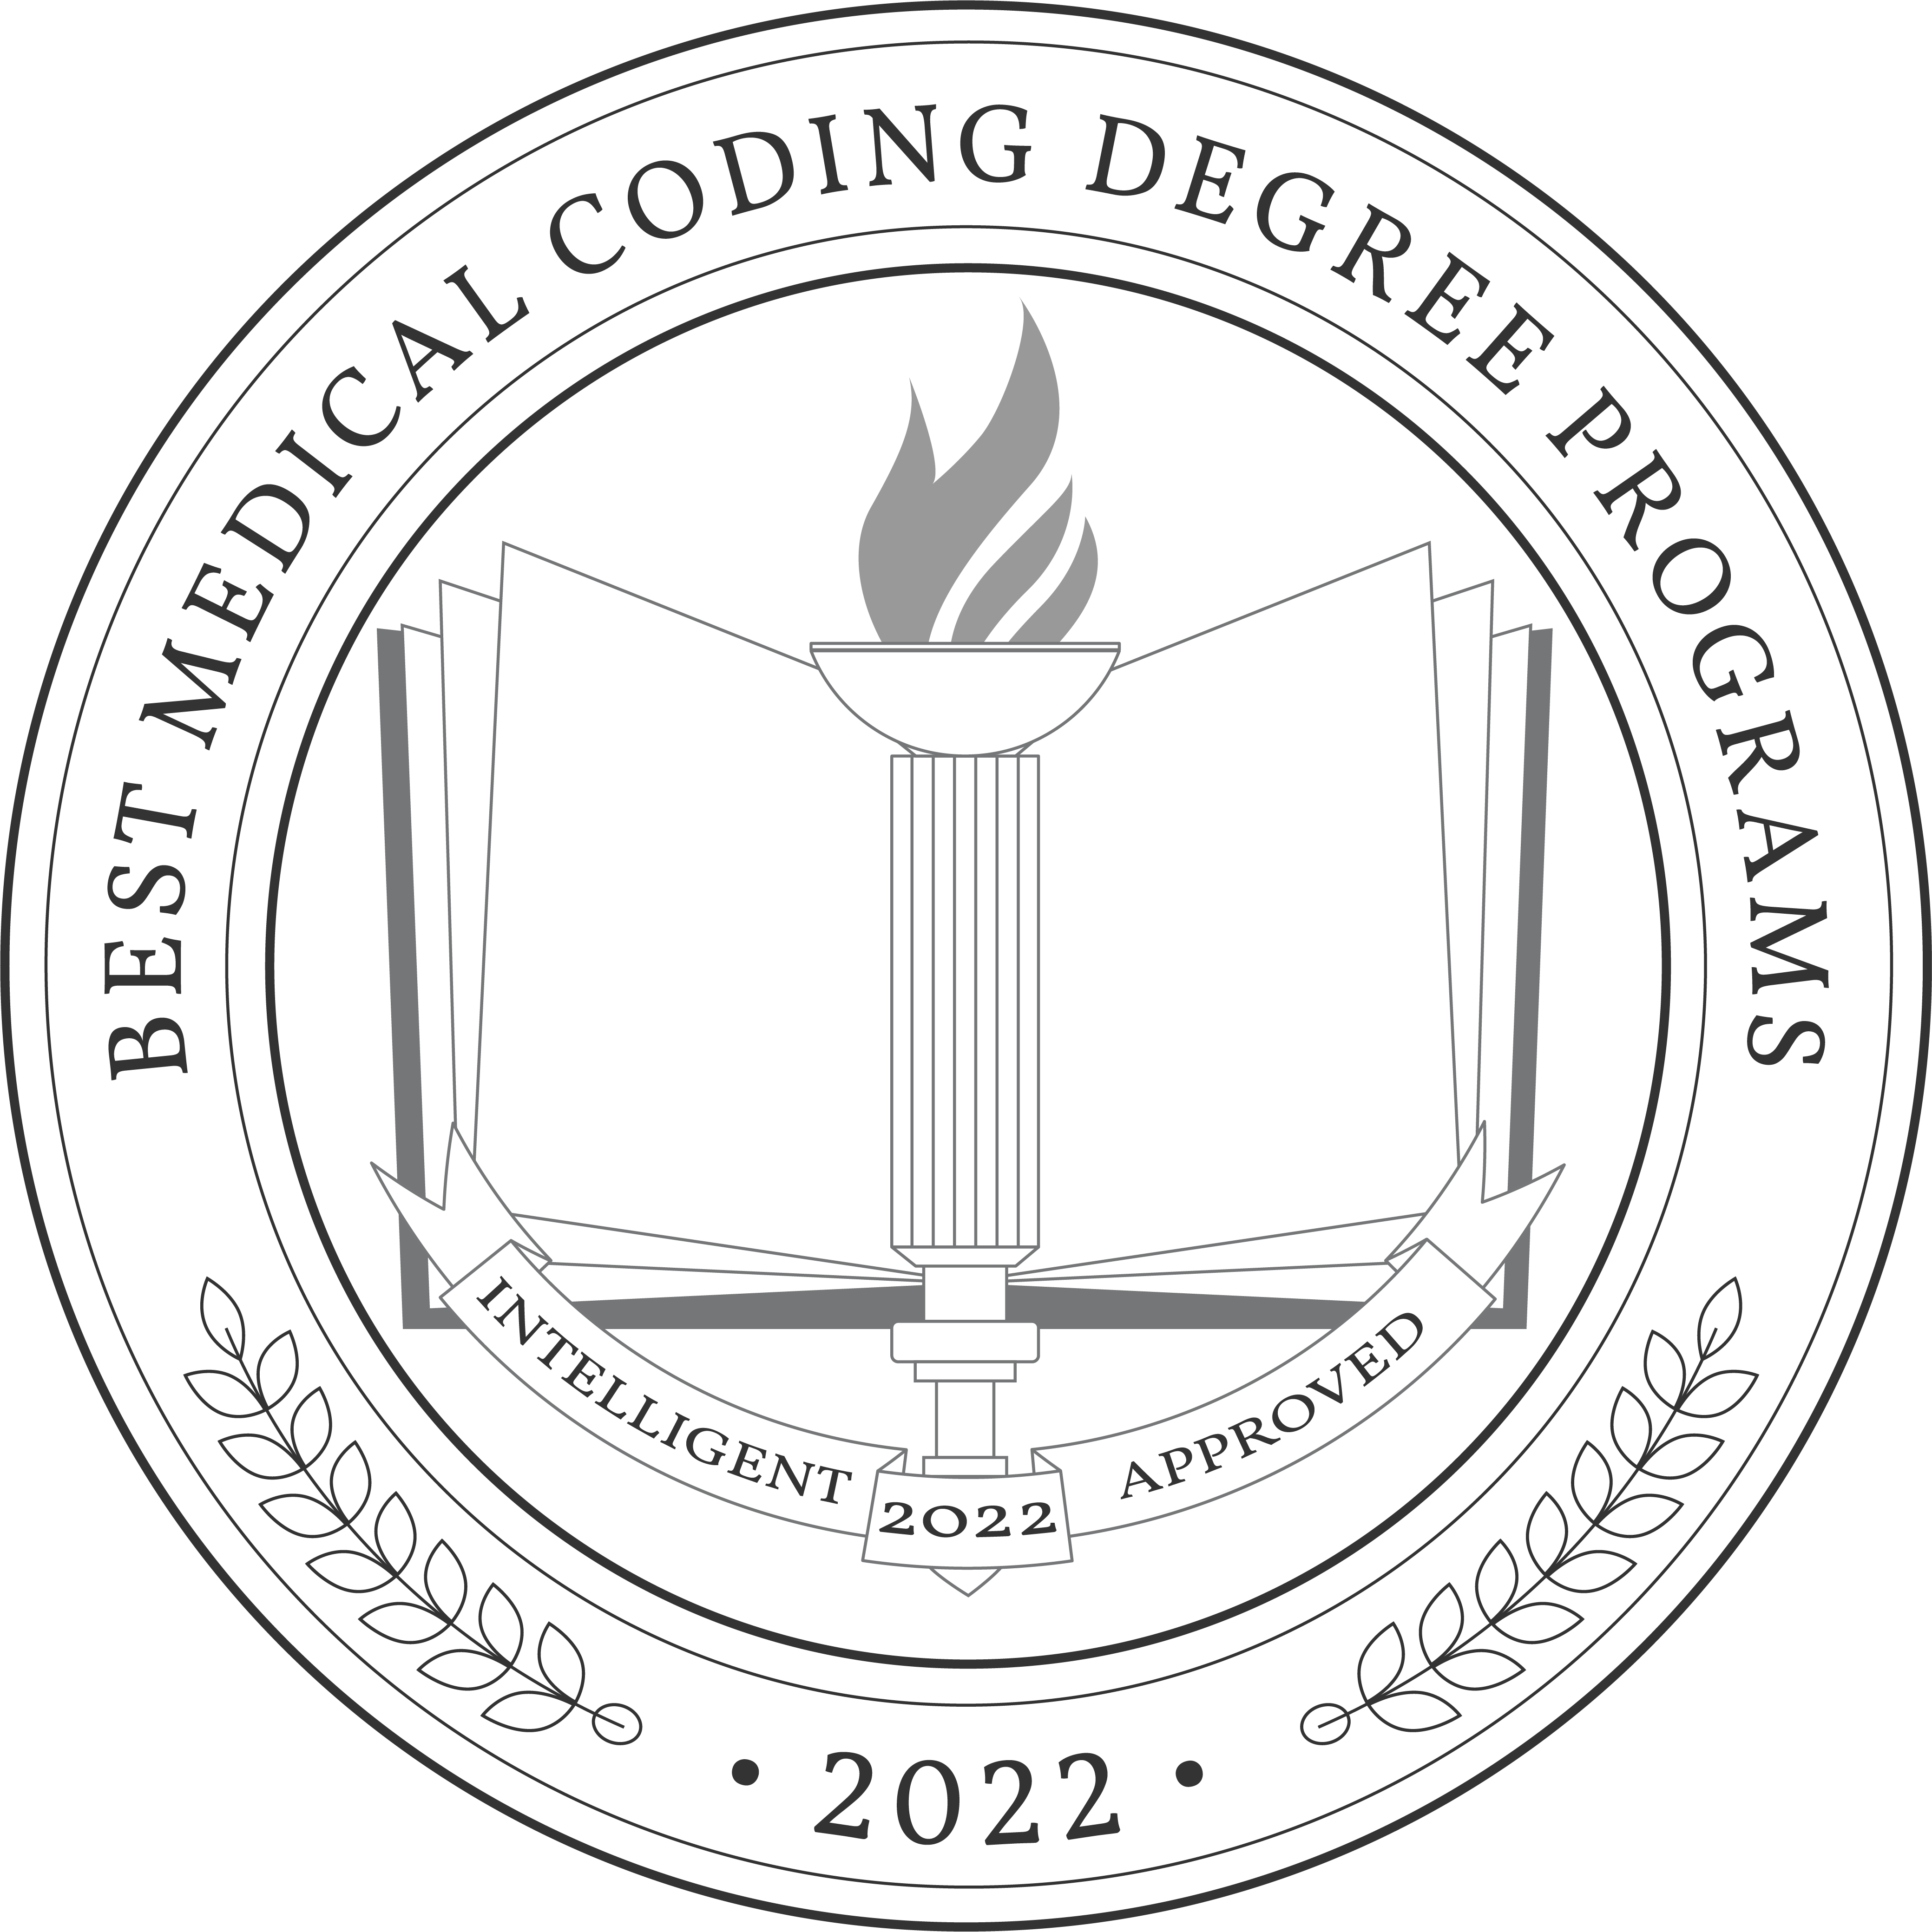 Best-Medical-Coding-Degree-Programs-Badge-1.png